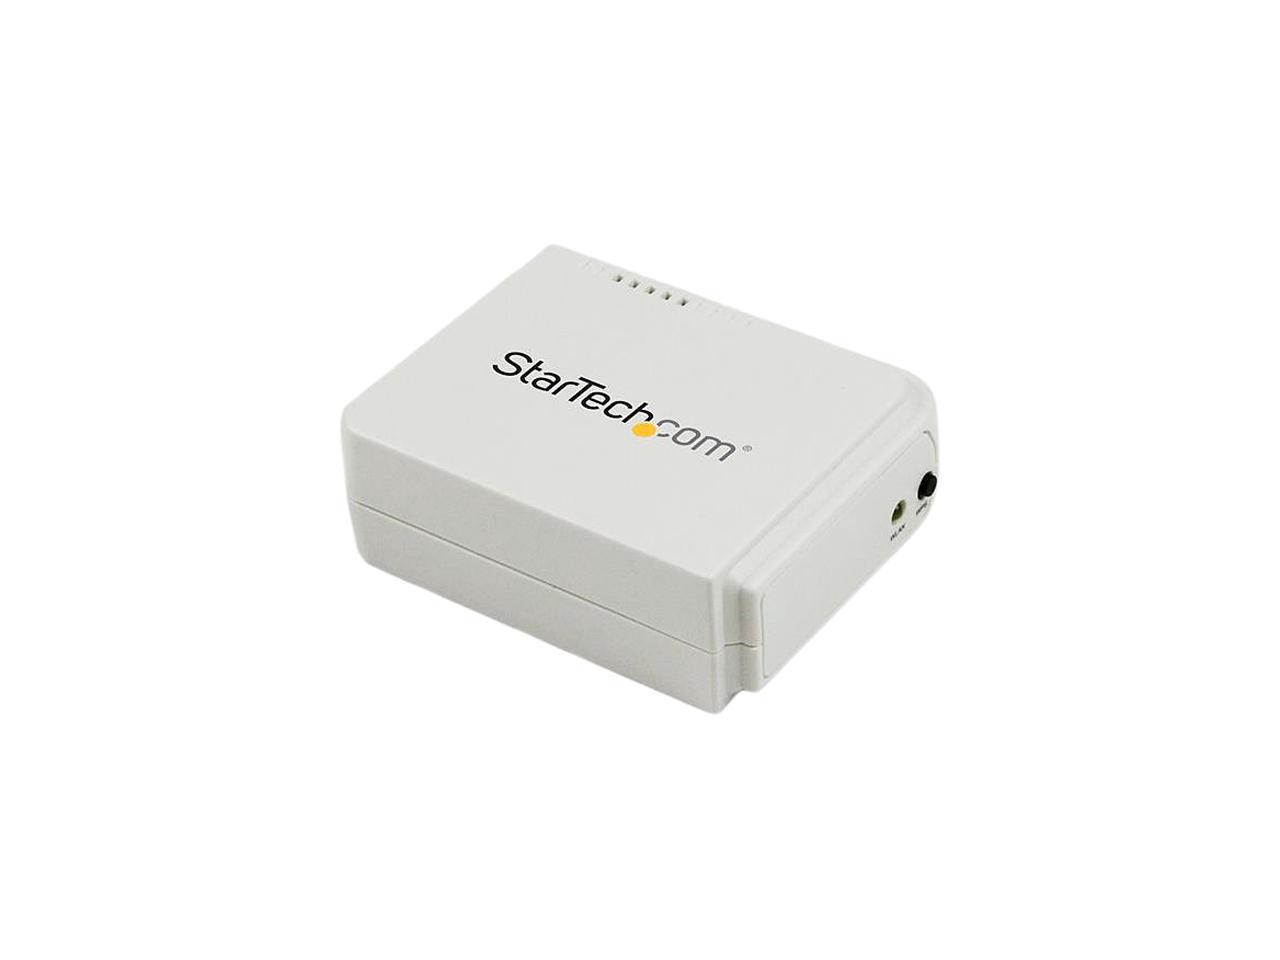 StarTech.com 1 Port USB Wireless N Network Print Server with 10/100 Mbps Ethernet Port - 802.11 b/g/n - Wireless USB 2.0 Print Server